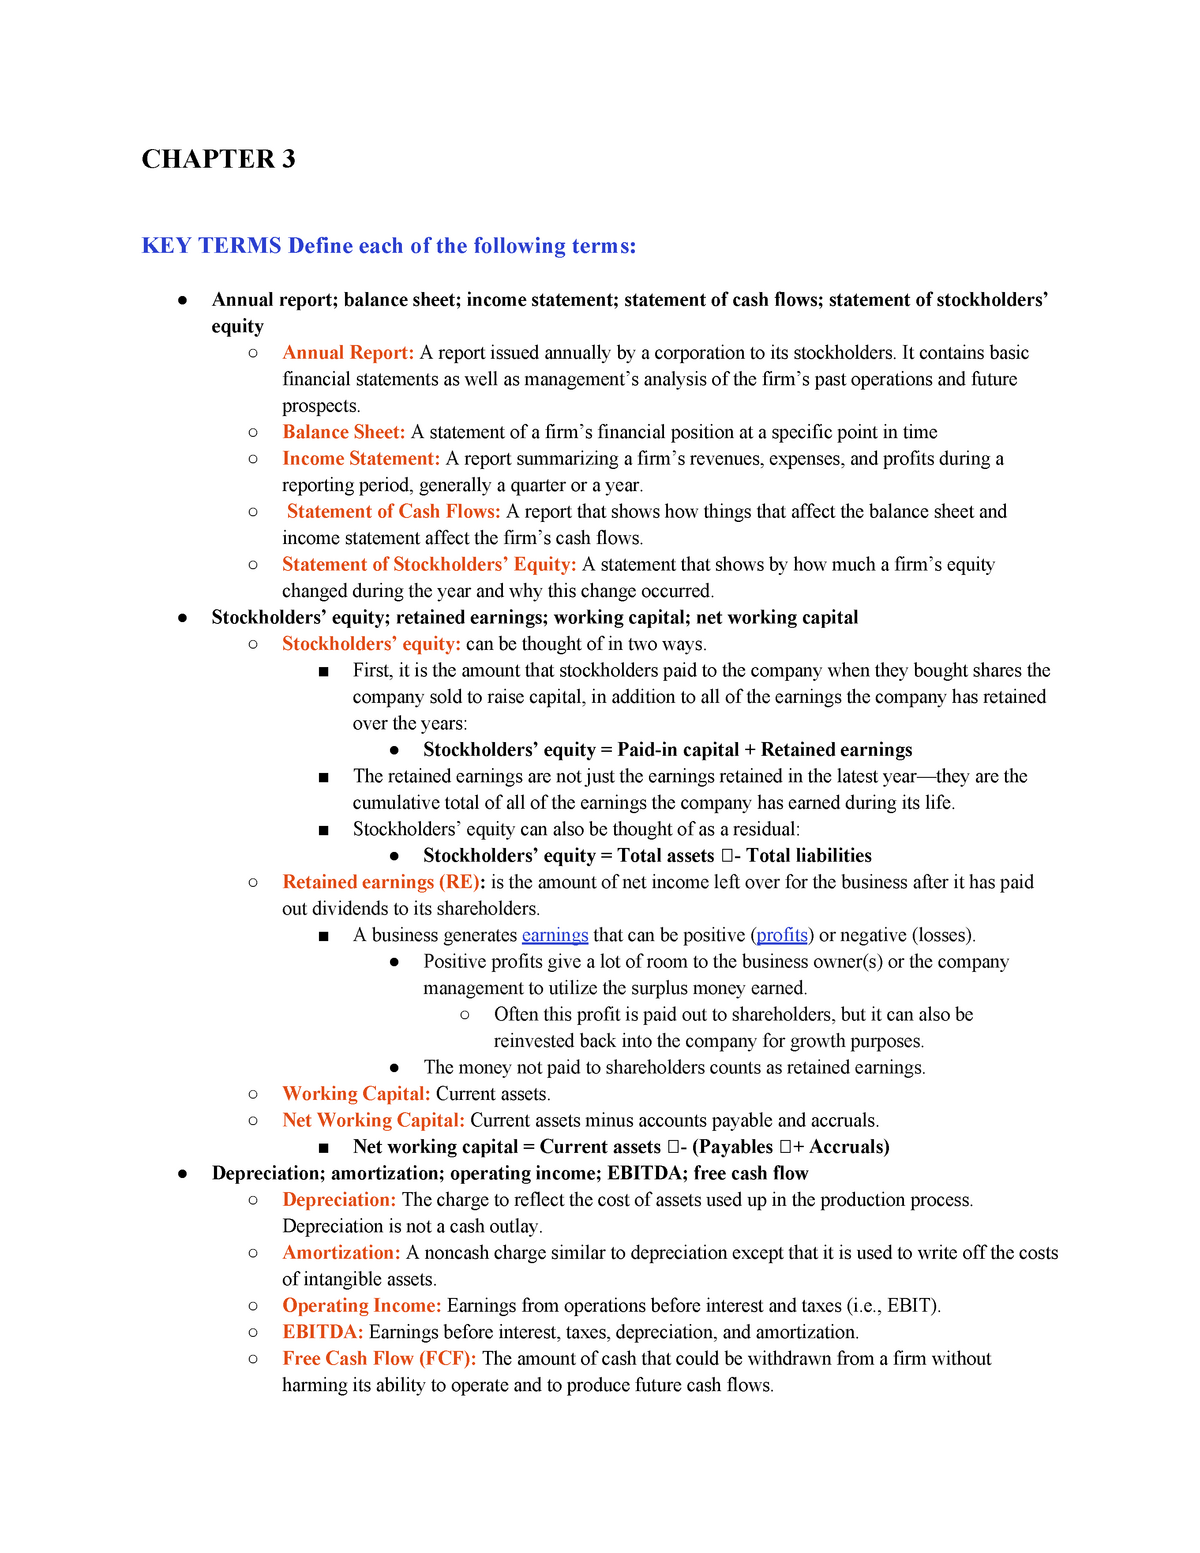 Midterm 1 Study Guide BUS1 170 Fundamentals of Finance SJSU StuDocu